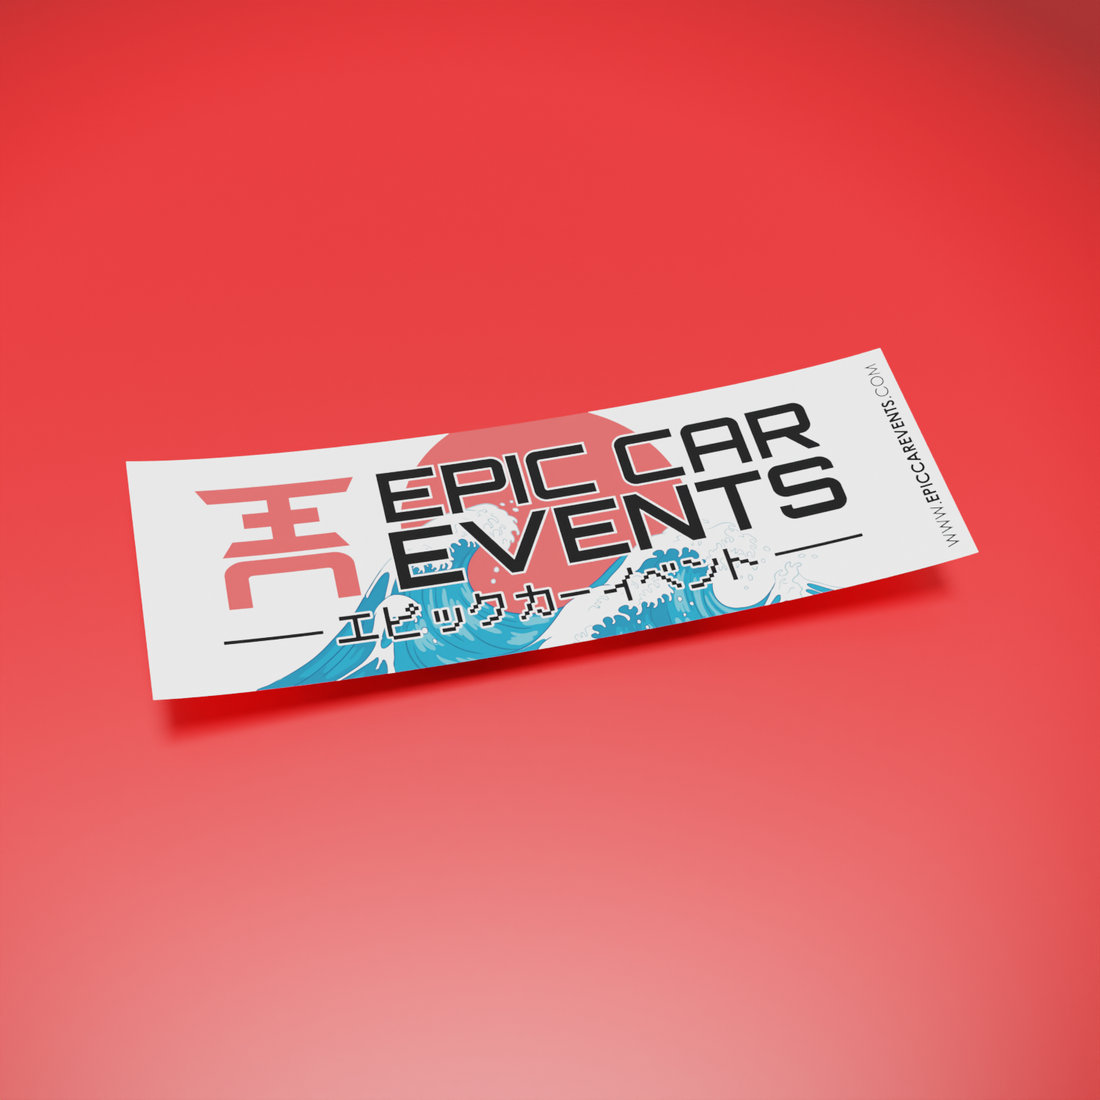 Epic Car Events Drift slapsticker